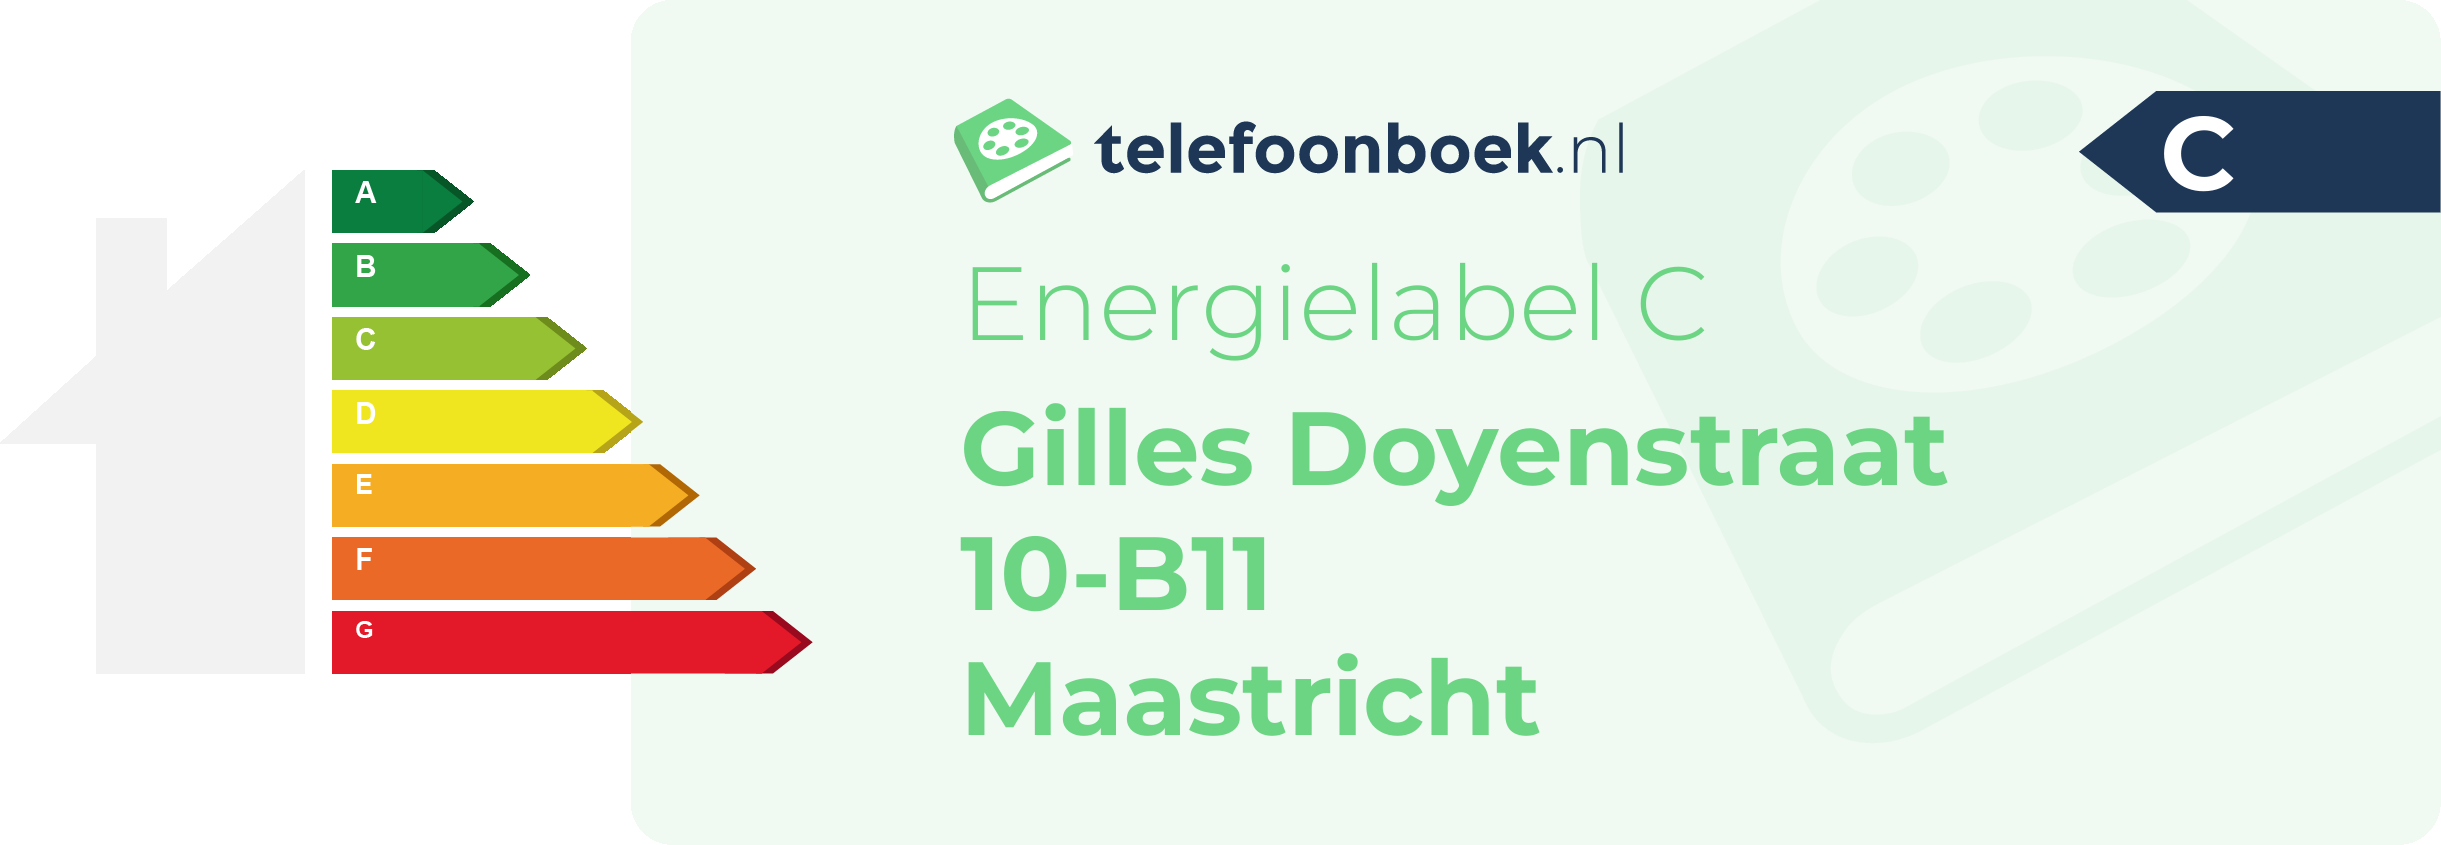 Energielabel Gilles Doyenstraat 10-B11 Maastricht